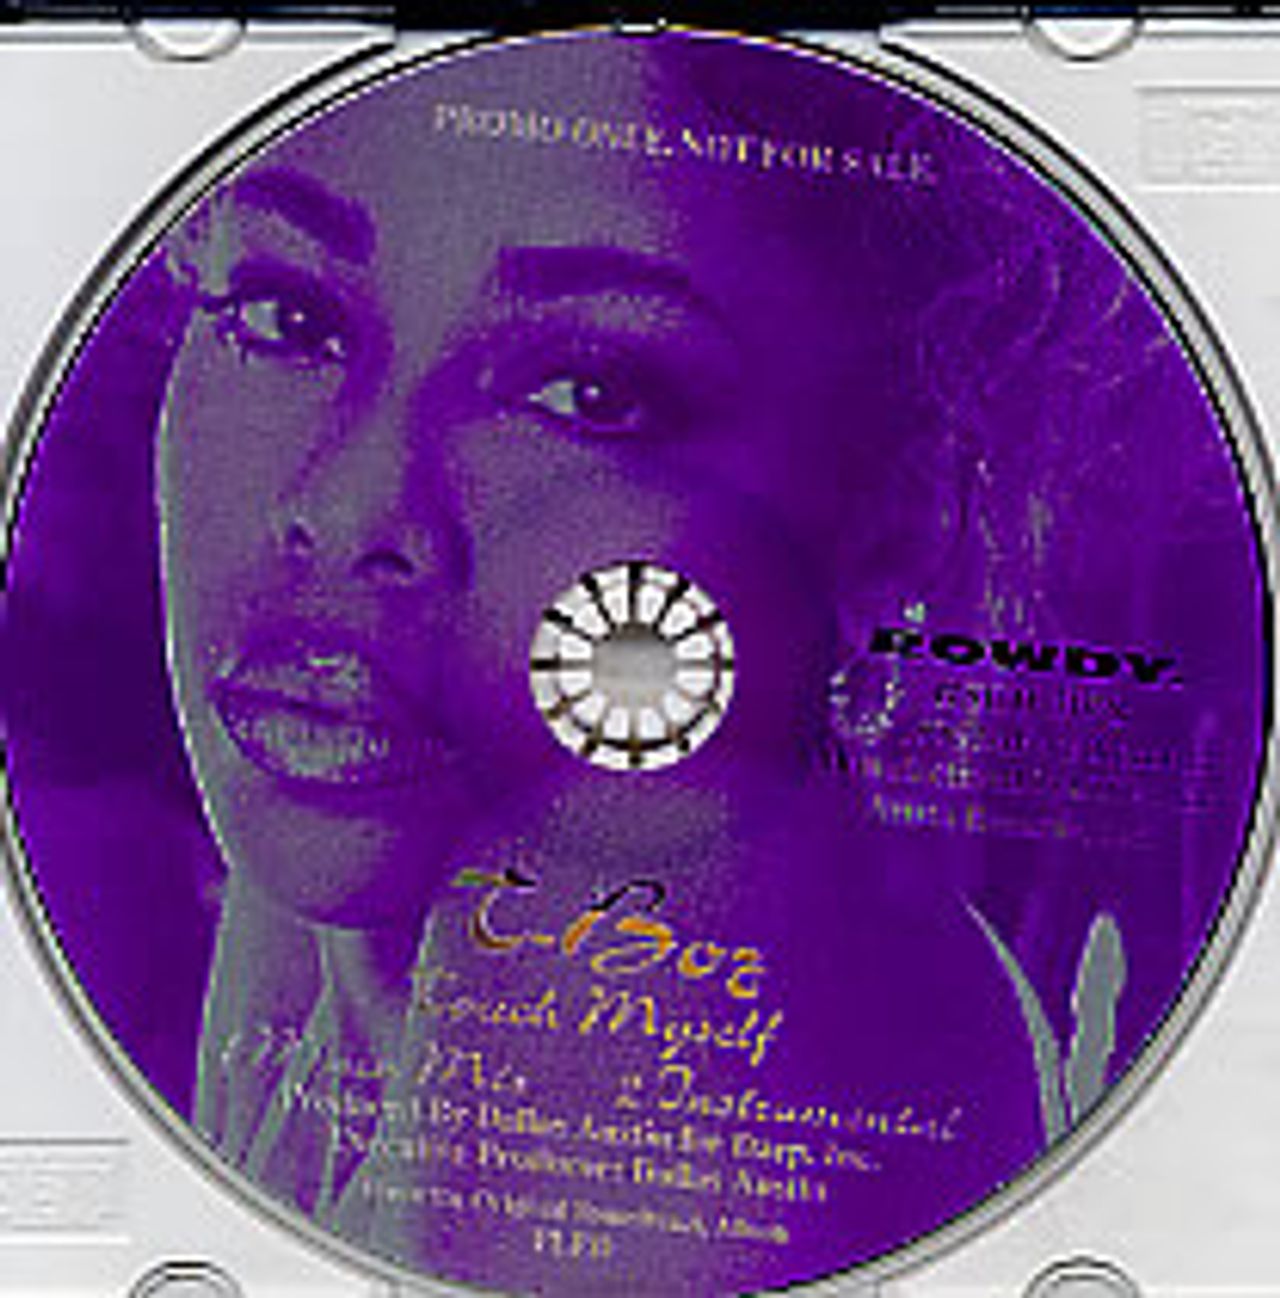 Tionne 'T-Boz' Watkins Touch Myself US Promo CD single — RareVinyl.com